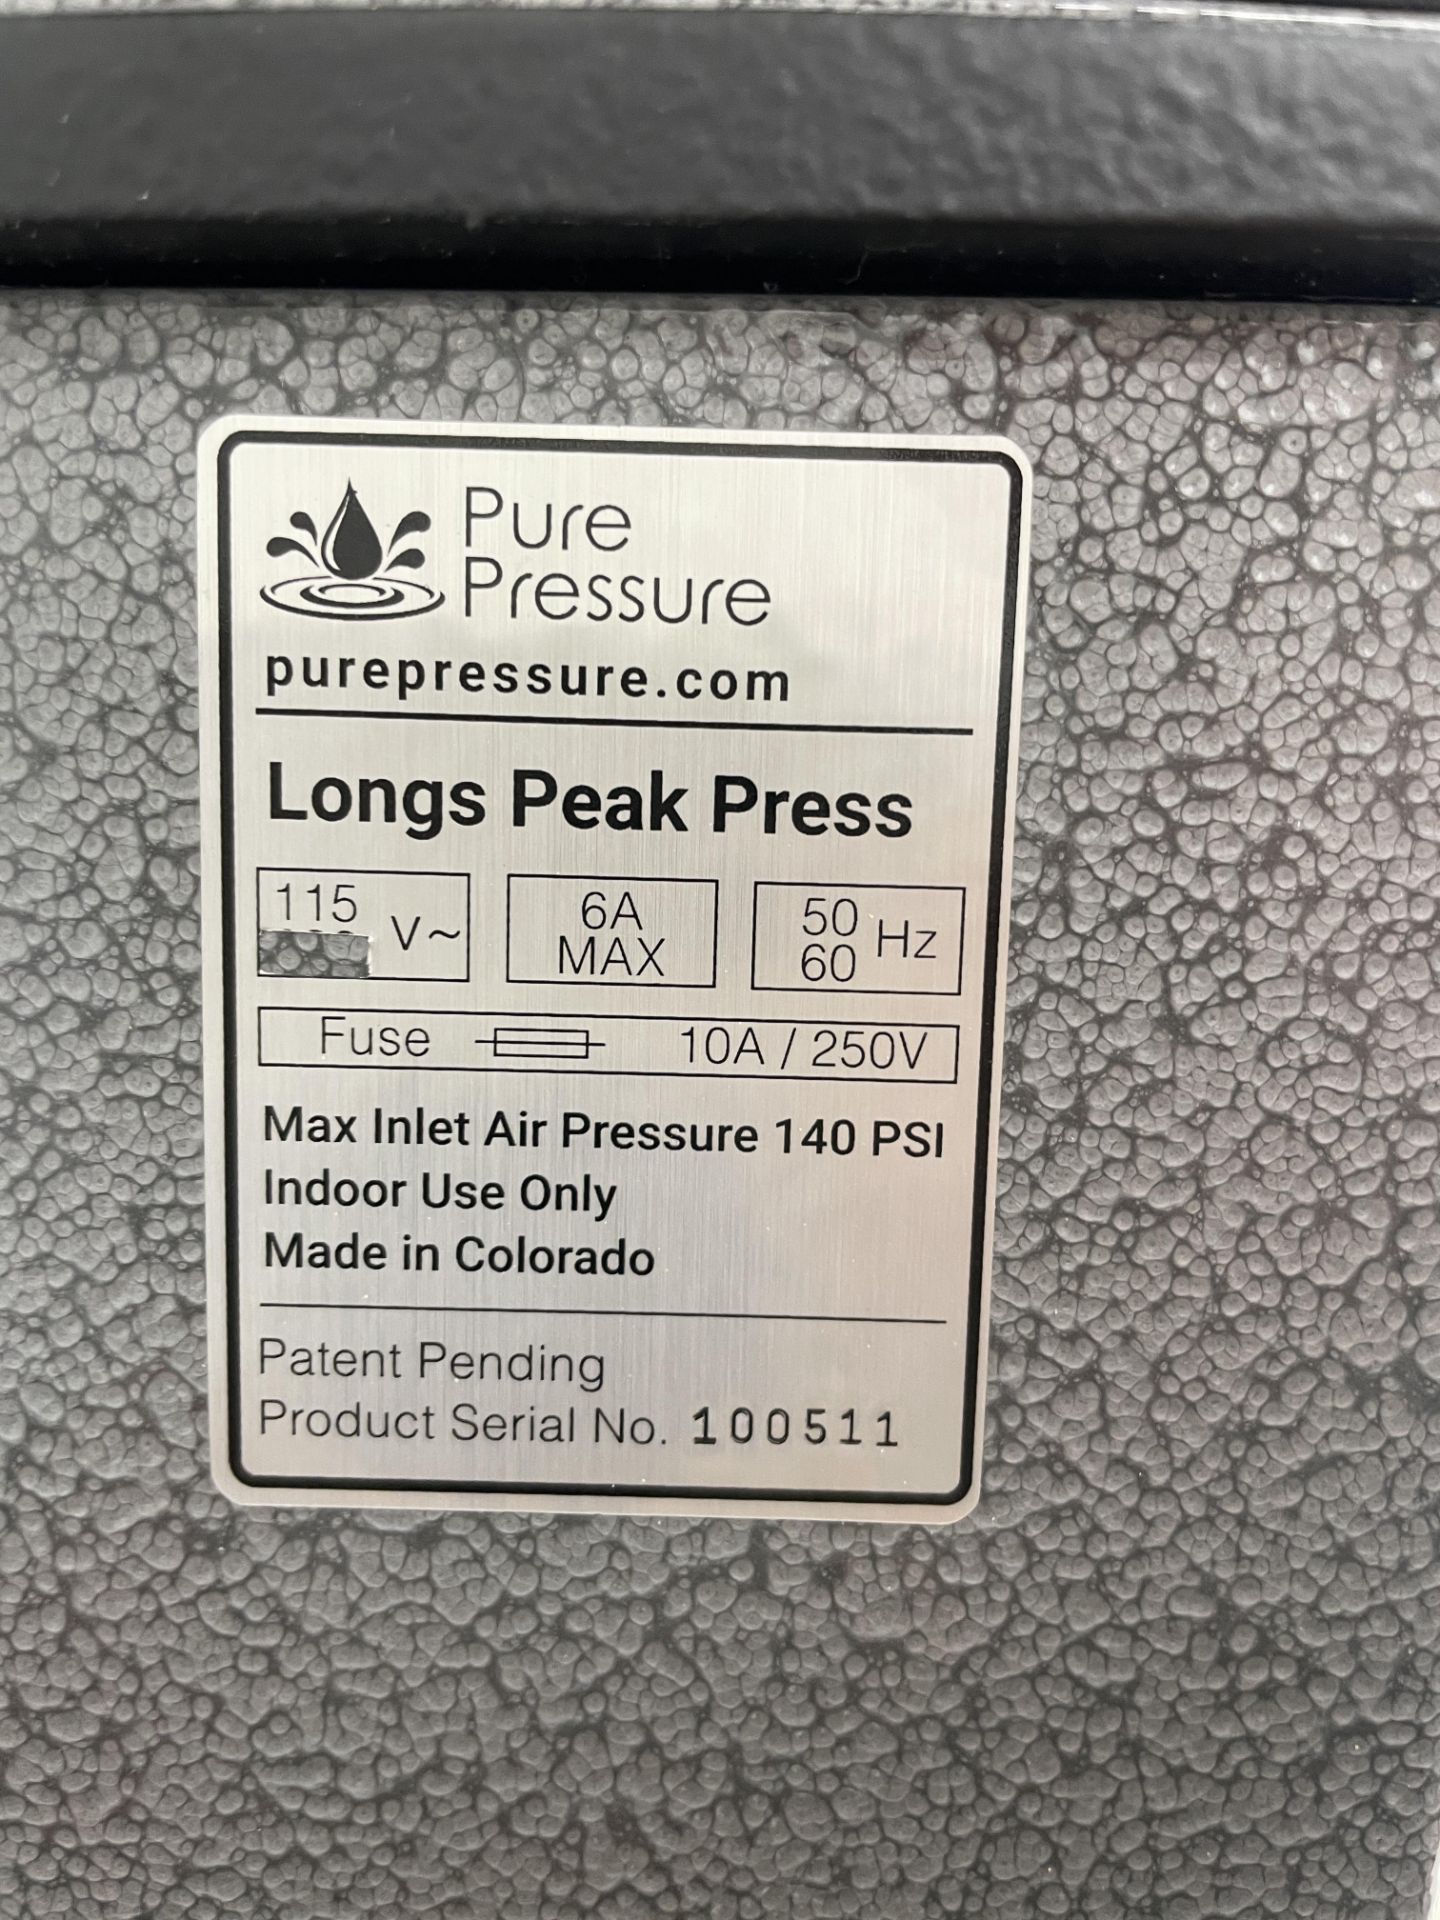 Used Pure Pressure Rosin Press. Model Longs Peak - Image 5 of 11